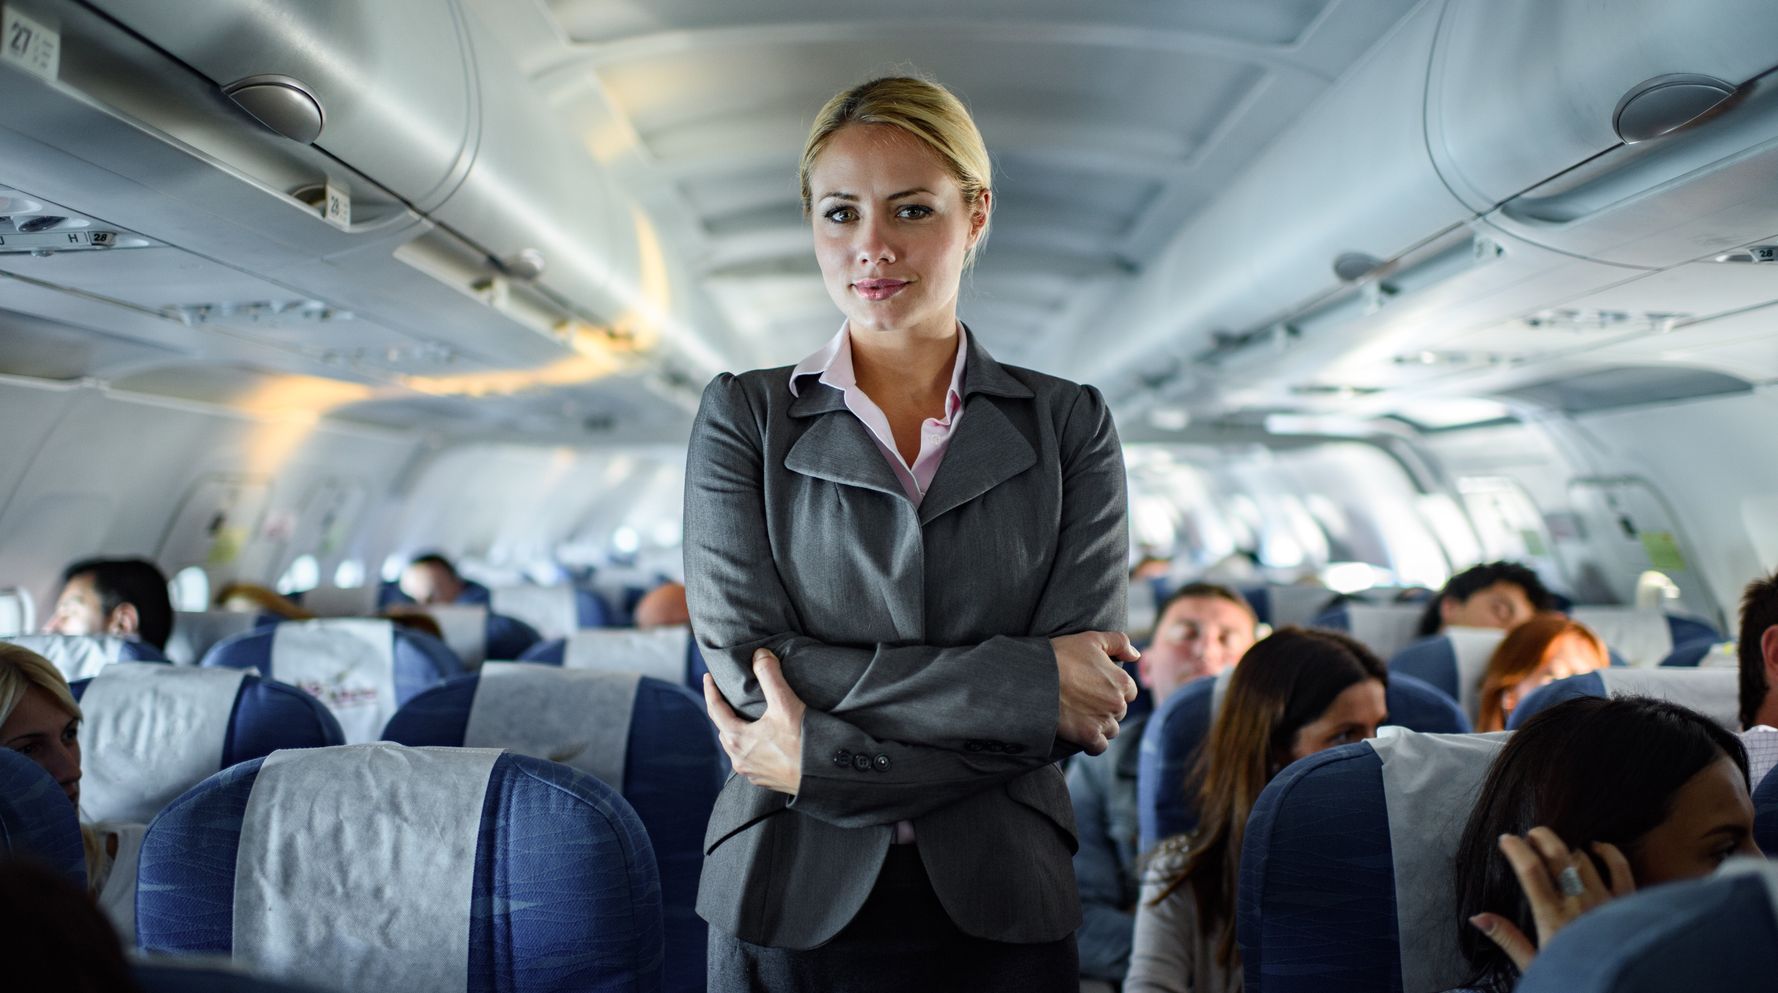 Flight attendant sits on the floor to comfort passenger - Upworthy